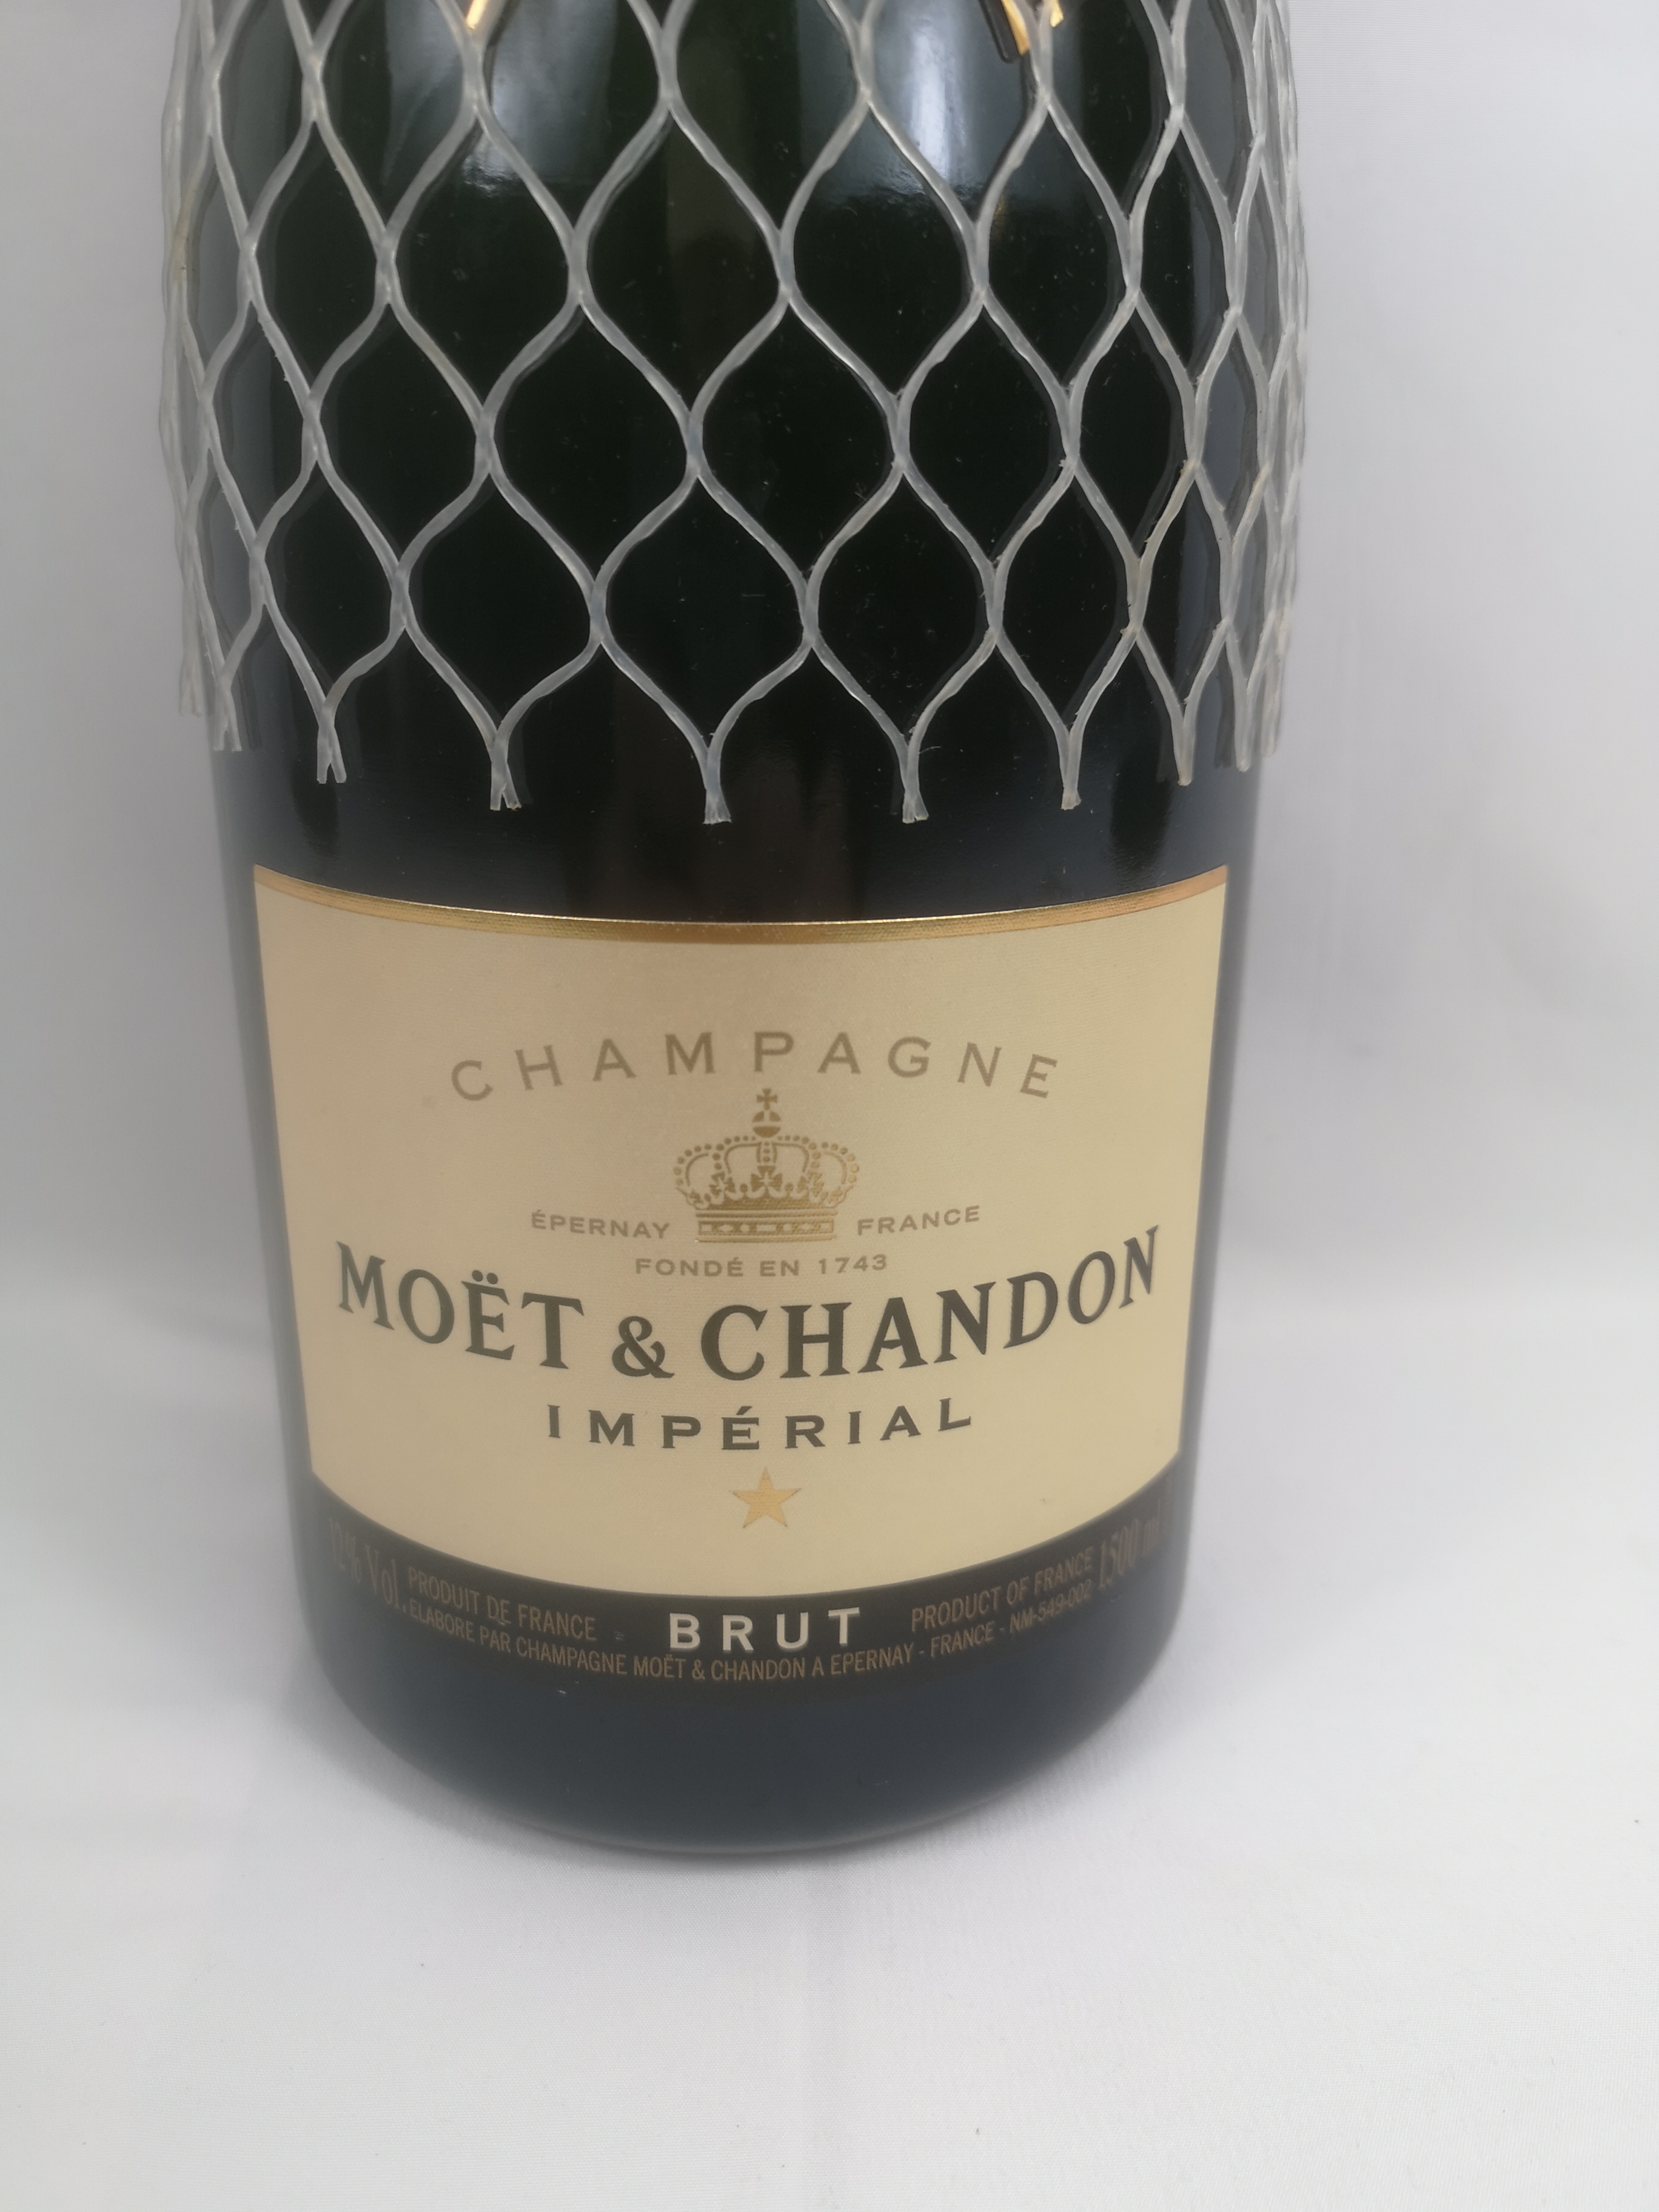 Magnum of Moet & Chandon champagne - Image 2 of 5